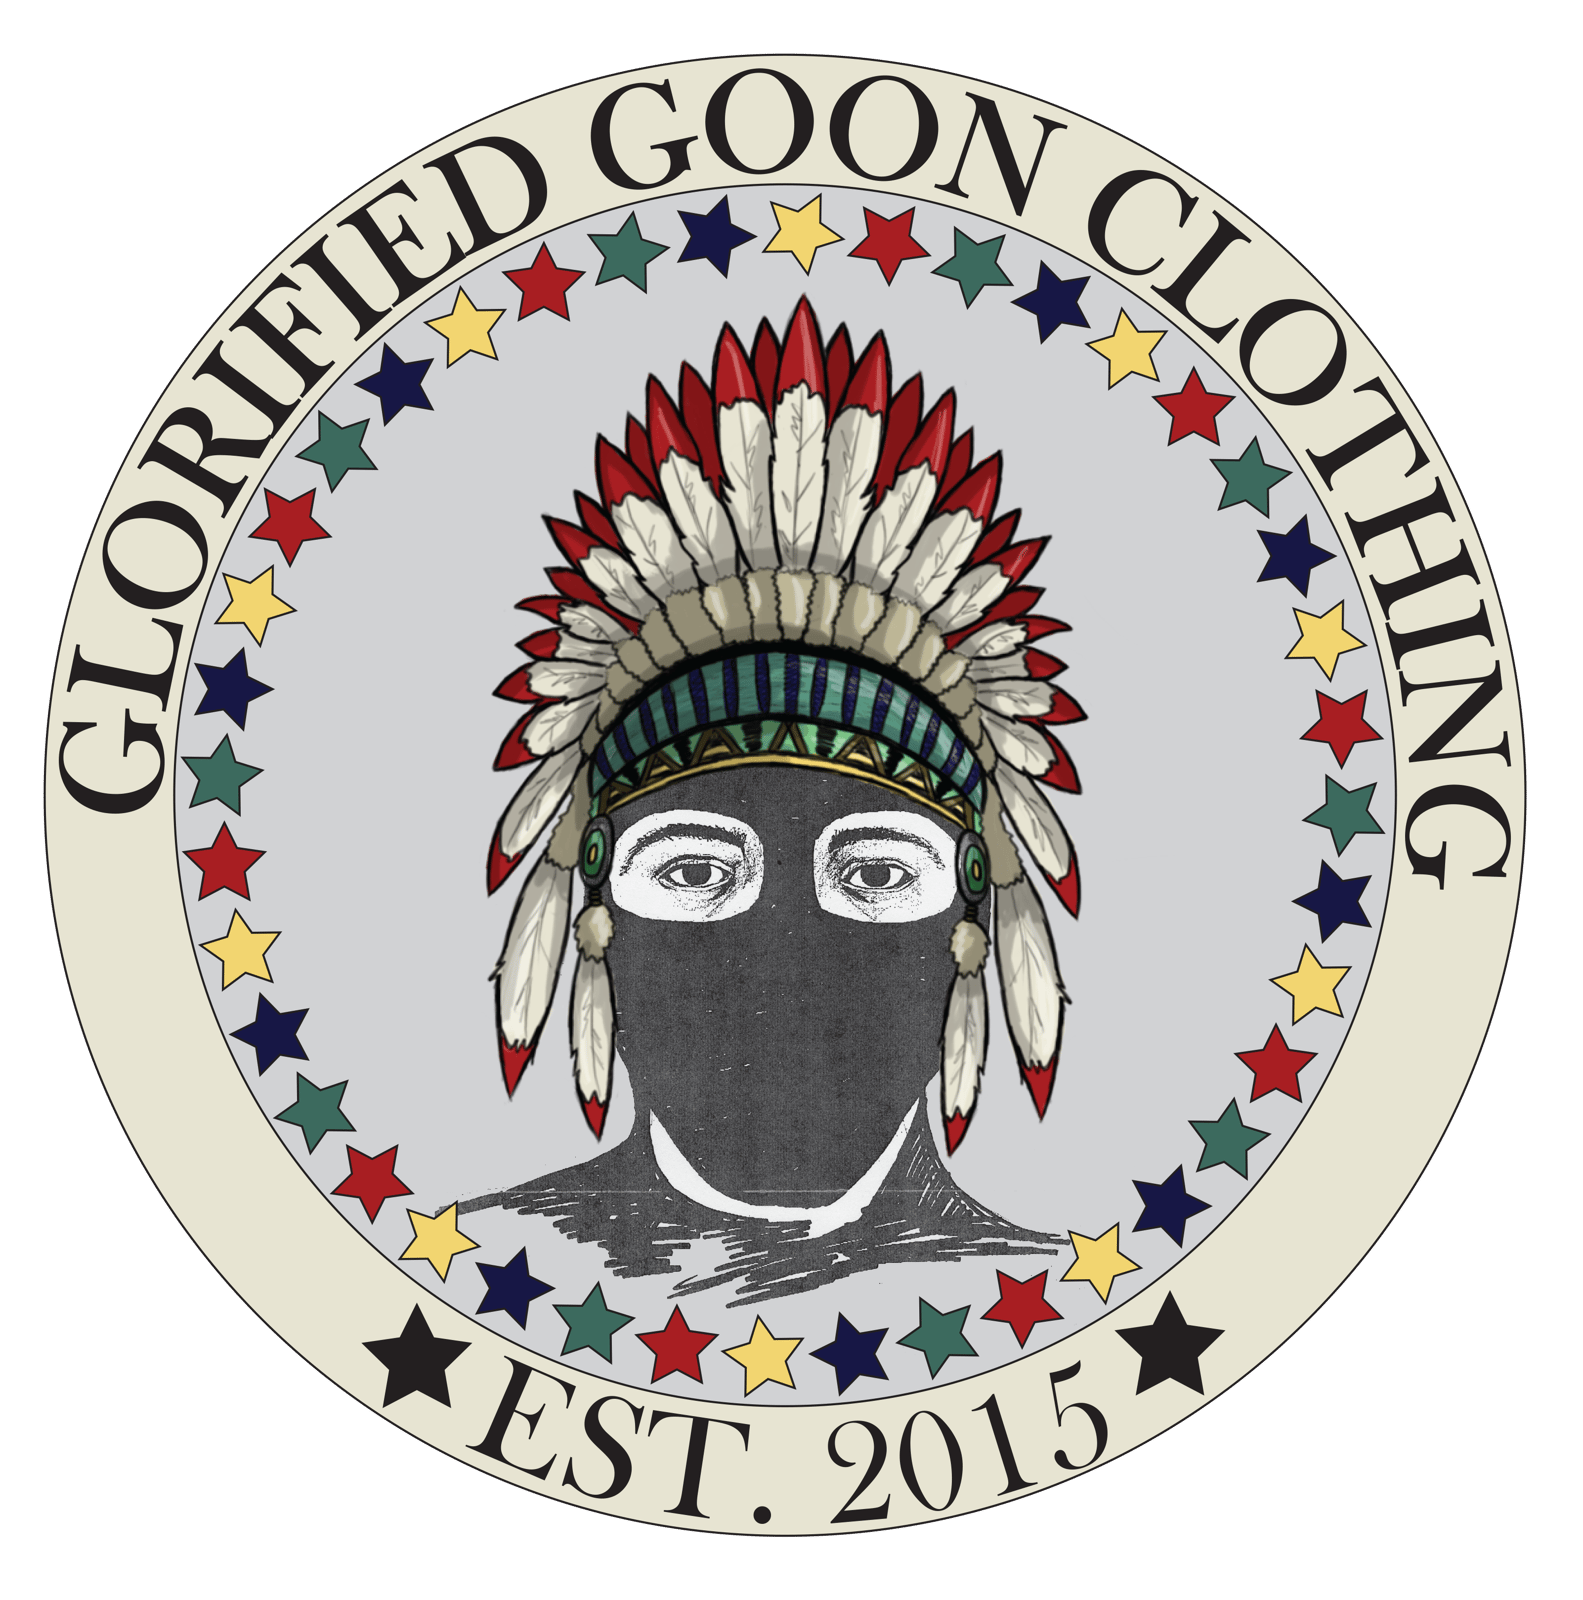 Glorified Goon Clothing